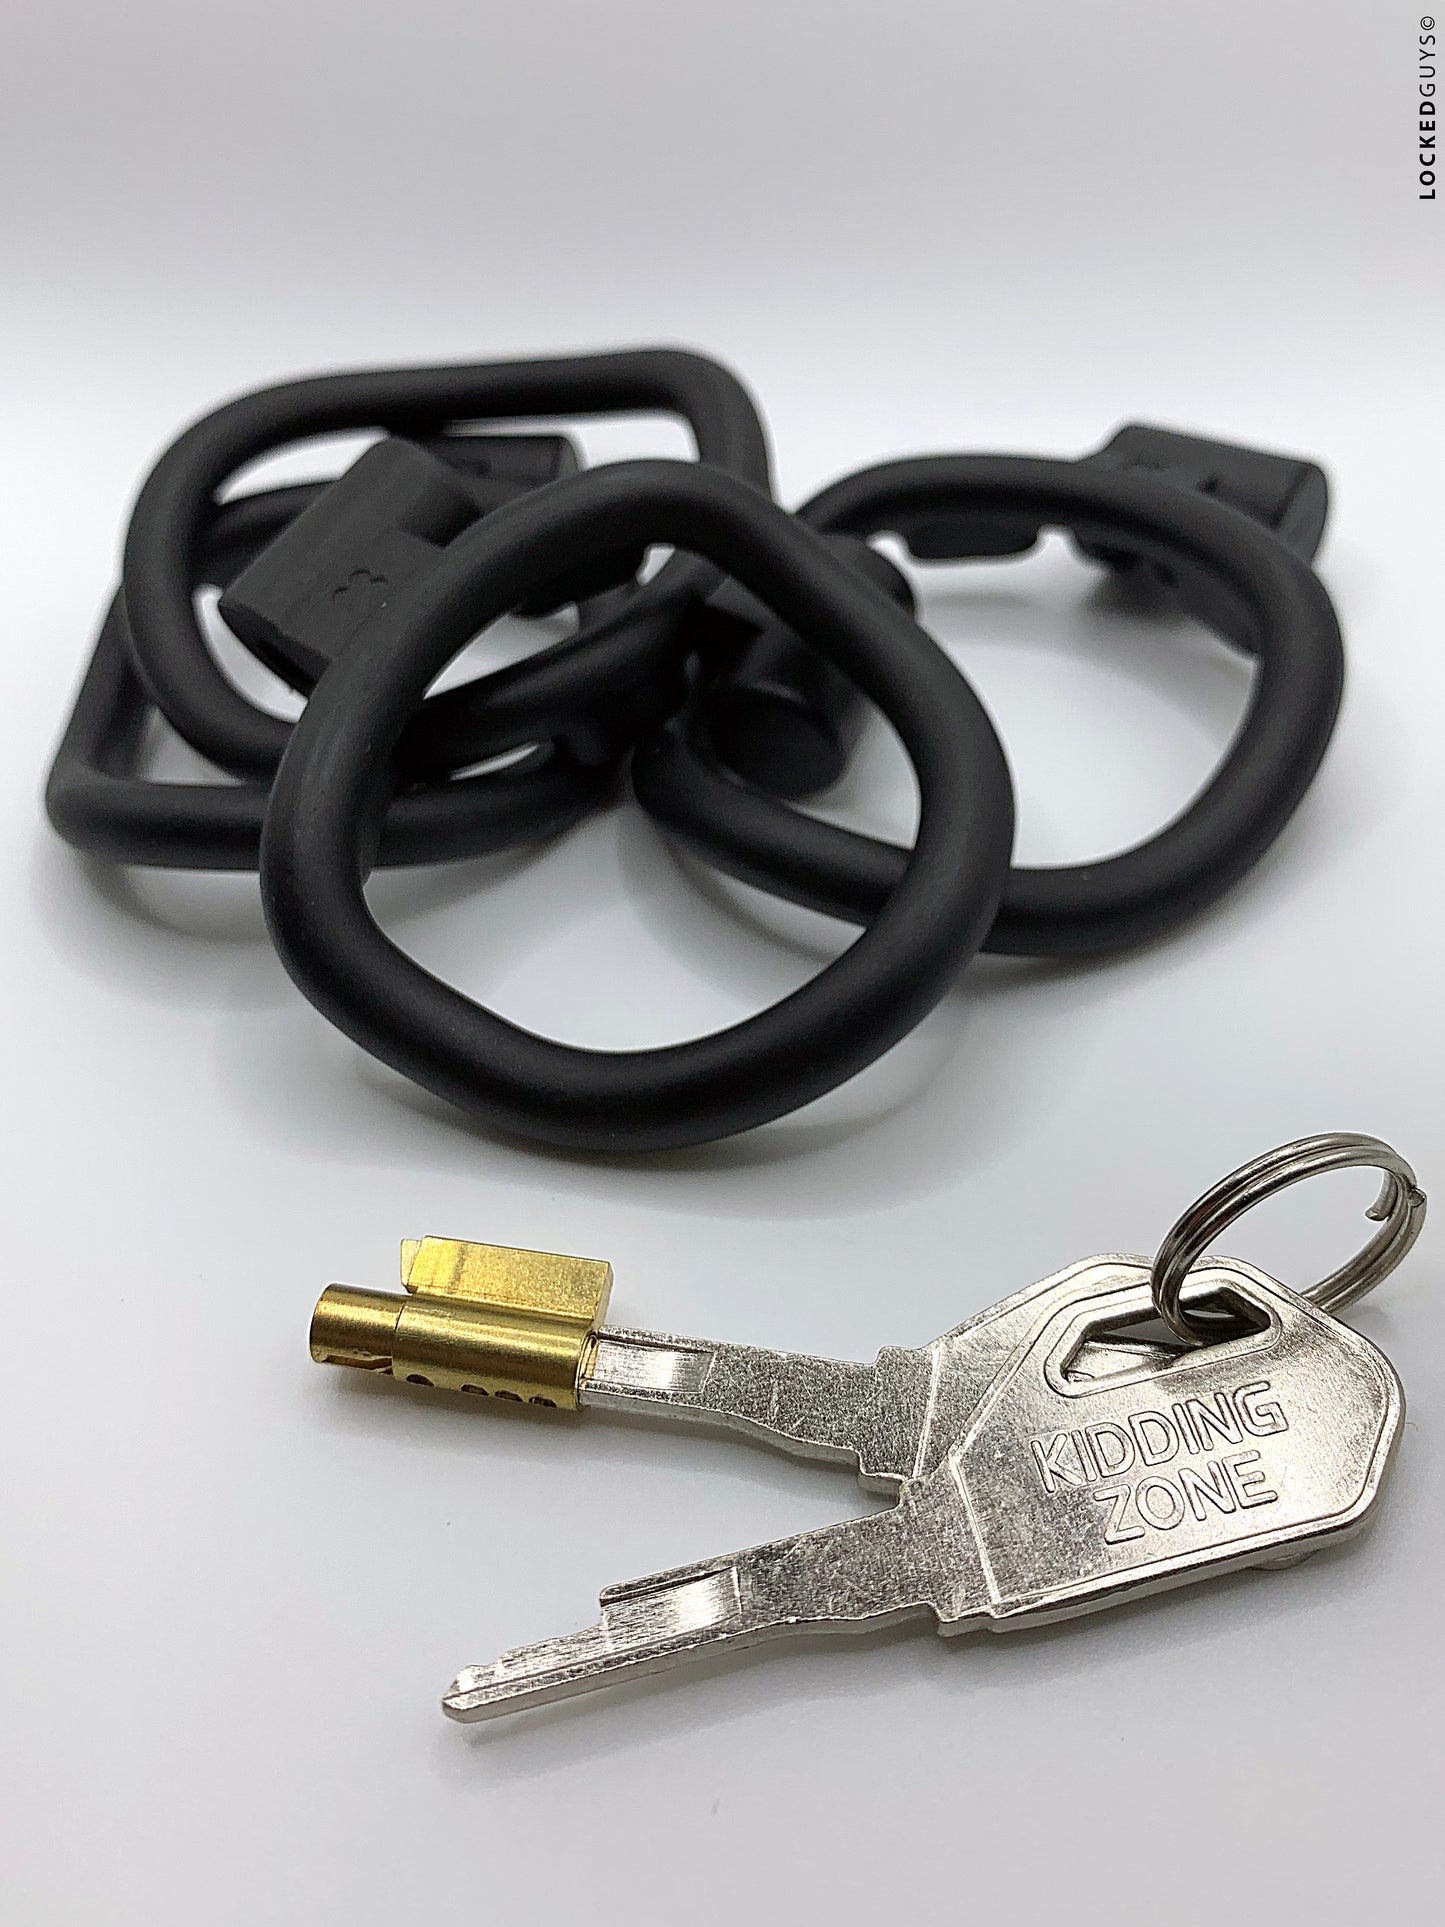 Locked Guys Starter Pack - Chastity Device For Beginners